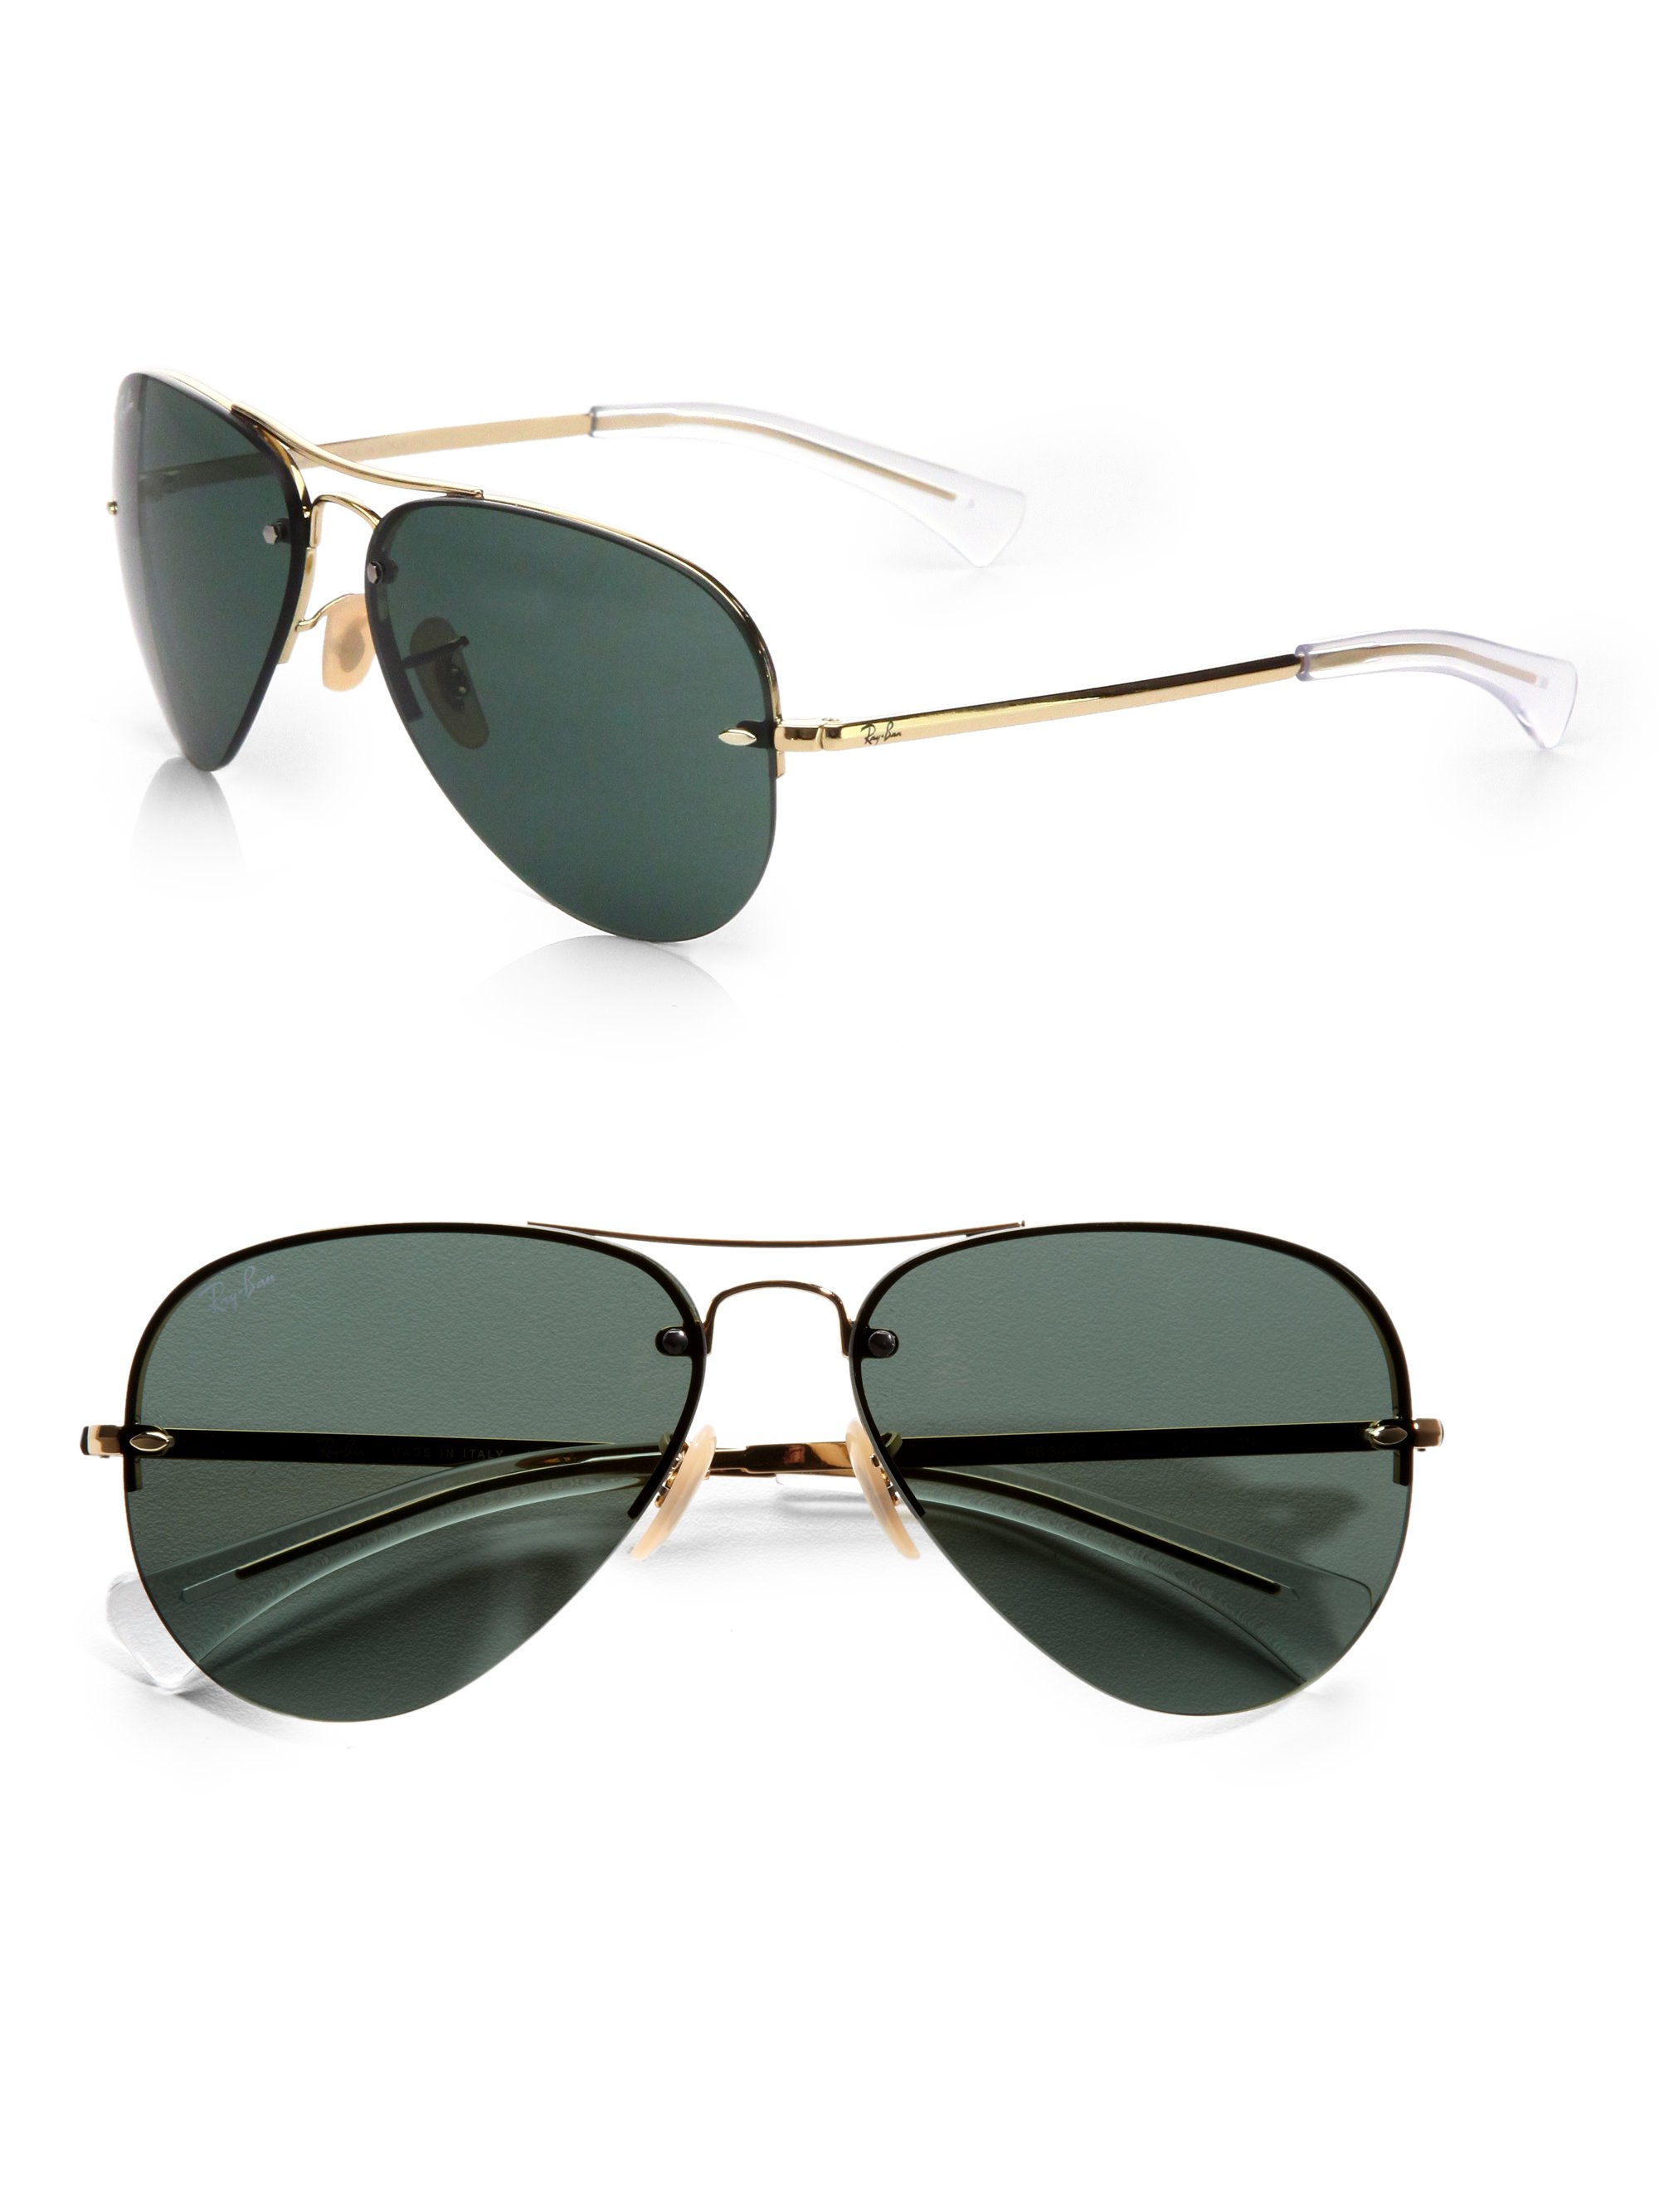 Lyst - Ray-Ban Original Polarized Aviator Sunglasses in Green